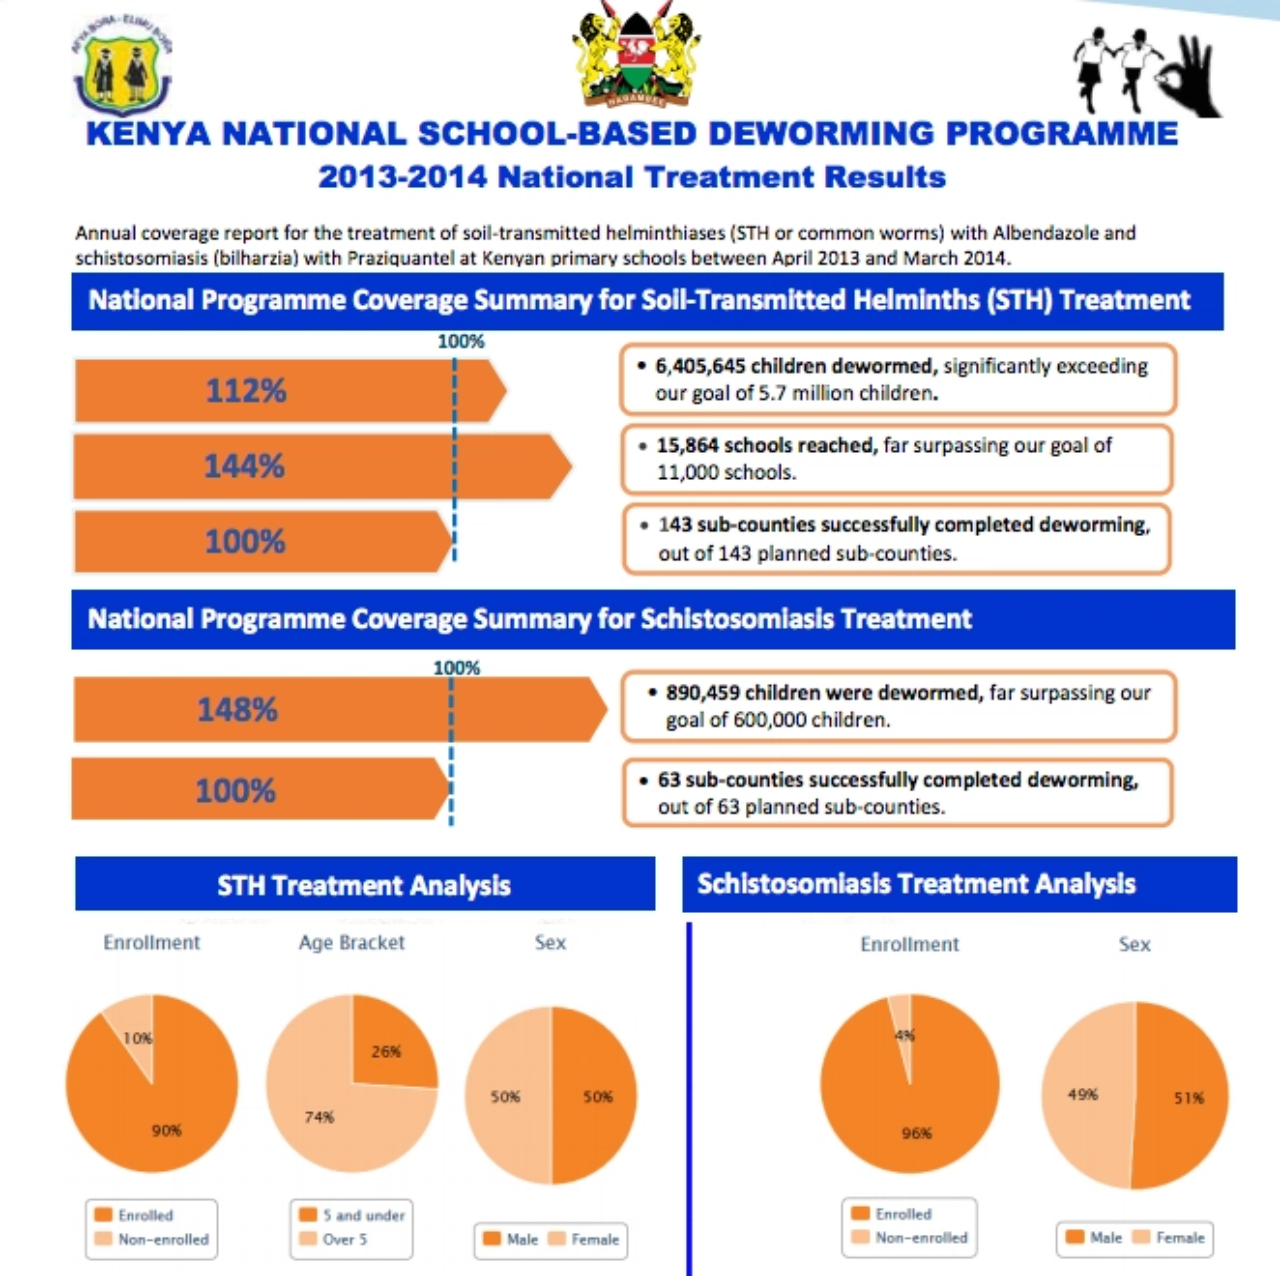 Kenya NSBDP treatment results 2013 14